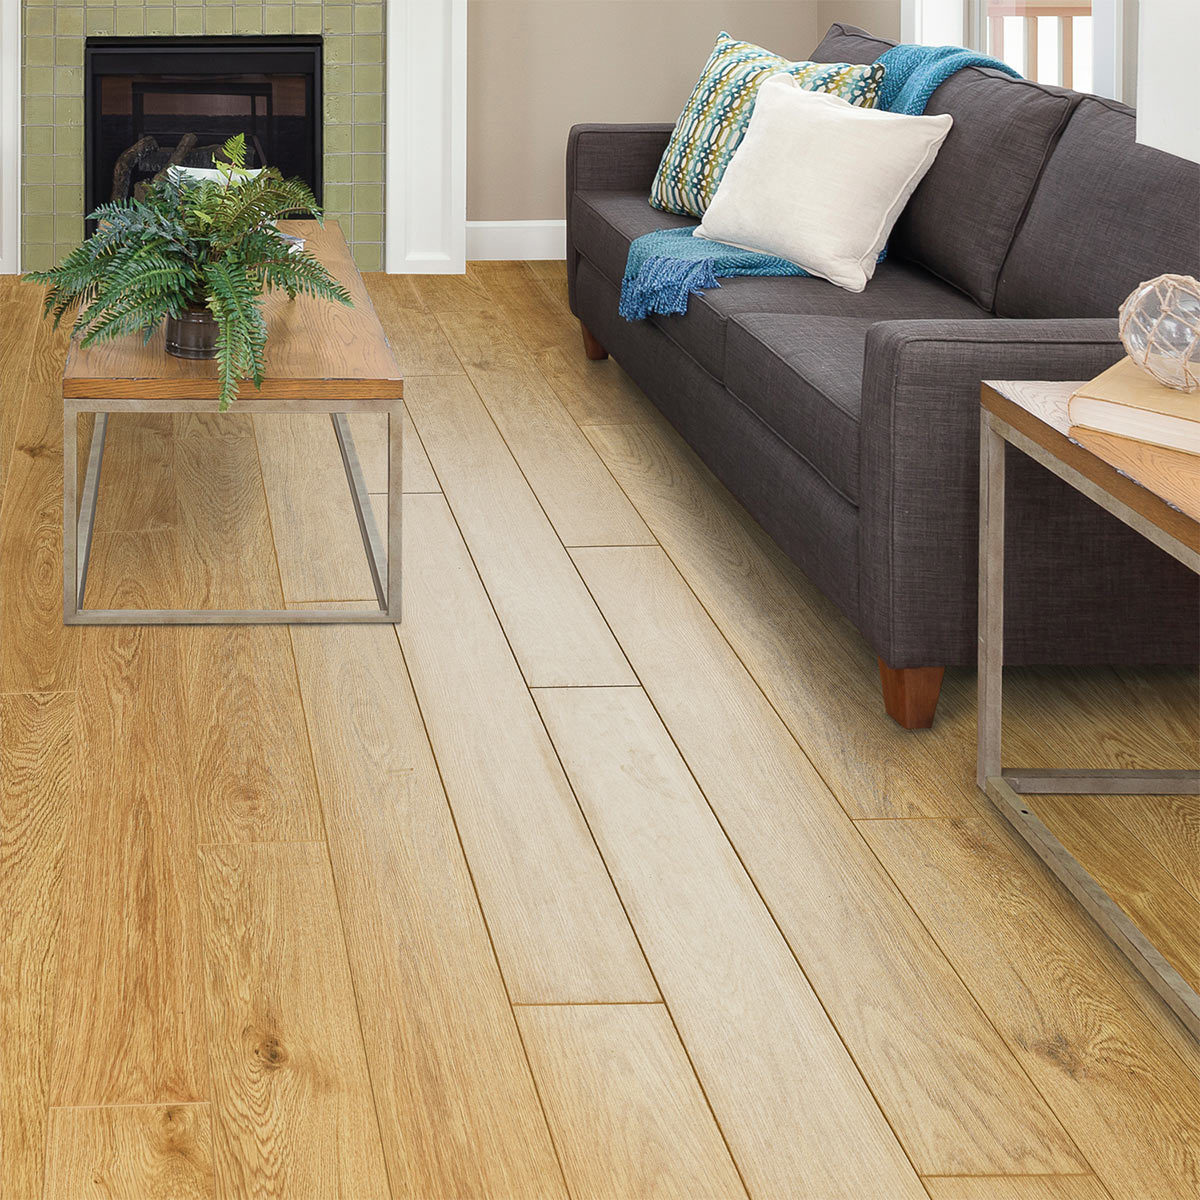 Golden Select Nottingham Oak Laminate, How To Select Laminate Flooring